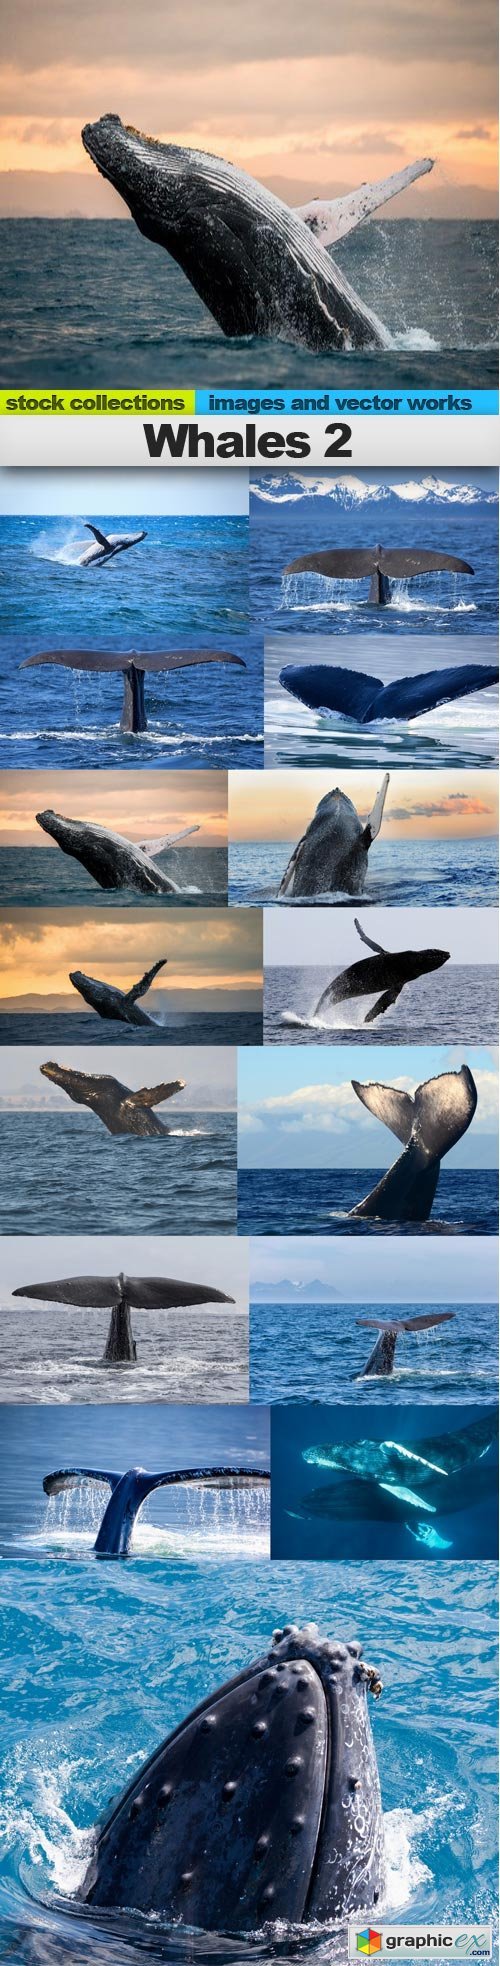 Whales 2, 15 x UHQ JPEG